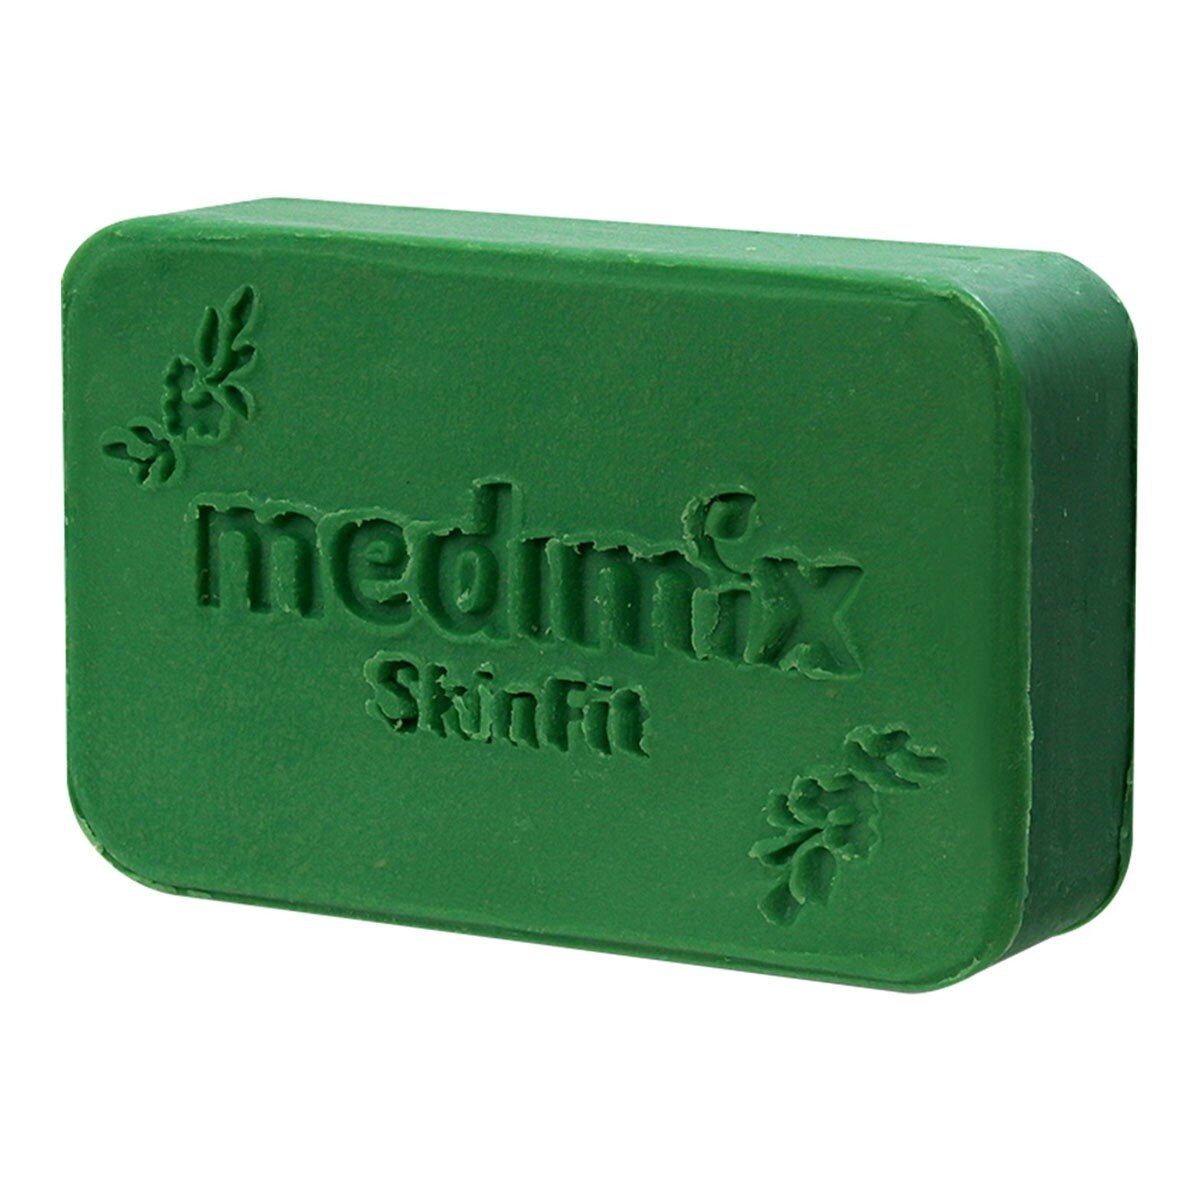 Medimix 印度綠寶石皇室藥草浴美肌皂 草本 200公克 X 64入